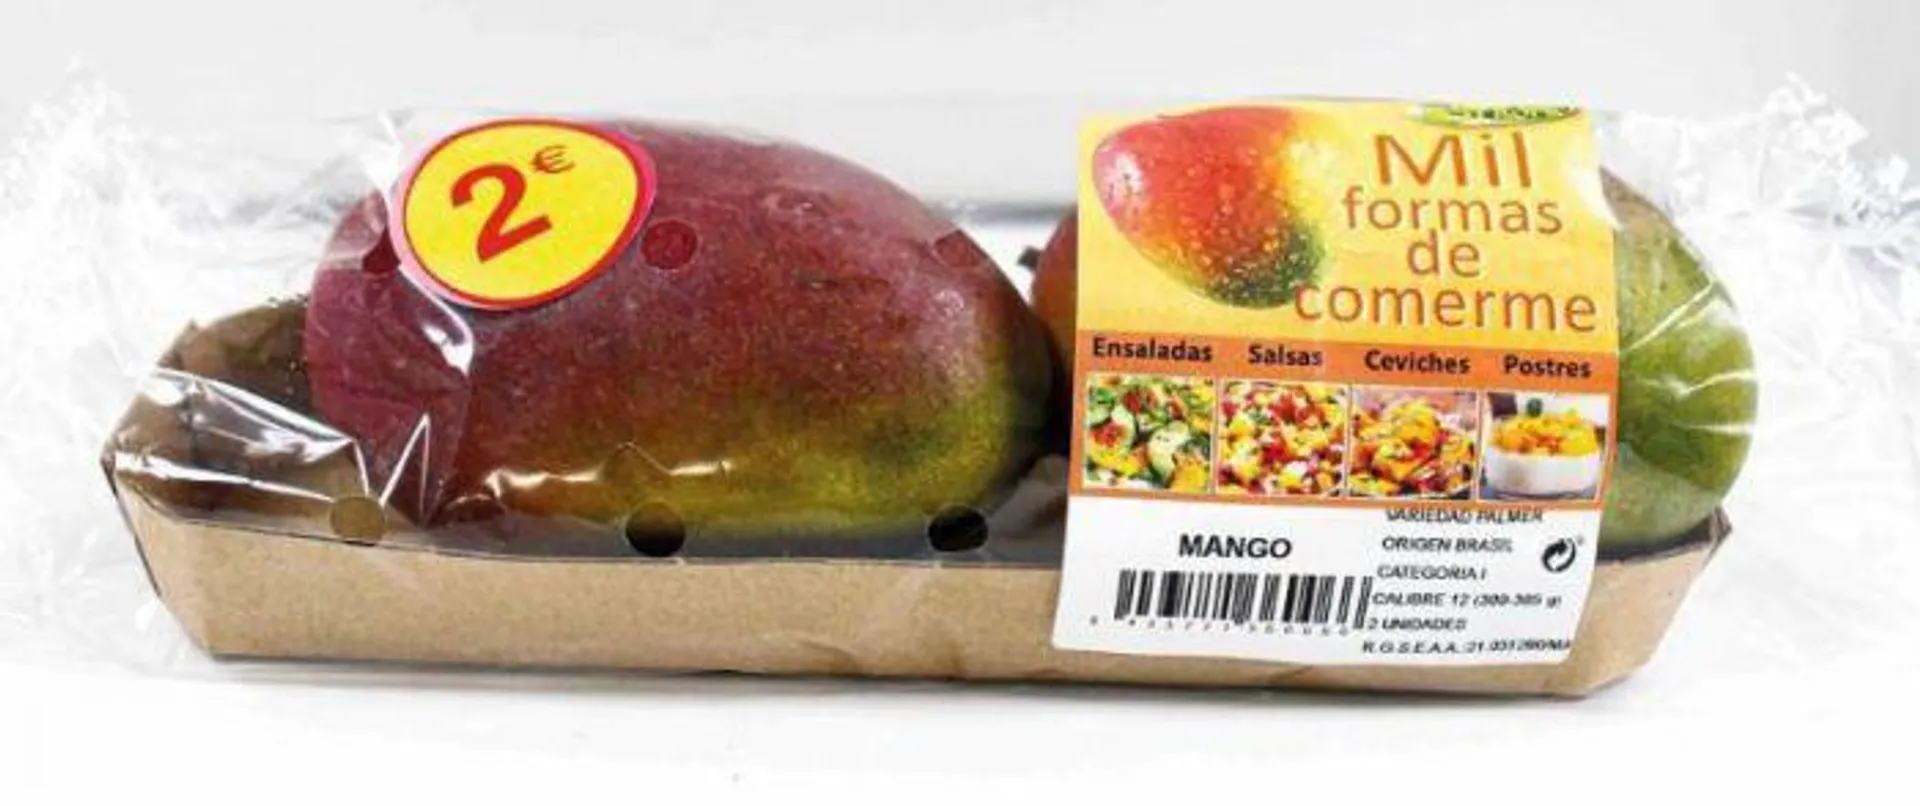 Mango palmer dulce natural tropic bandeja 600gr